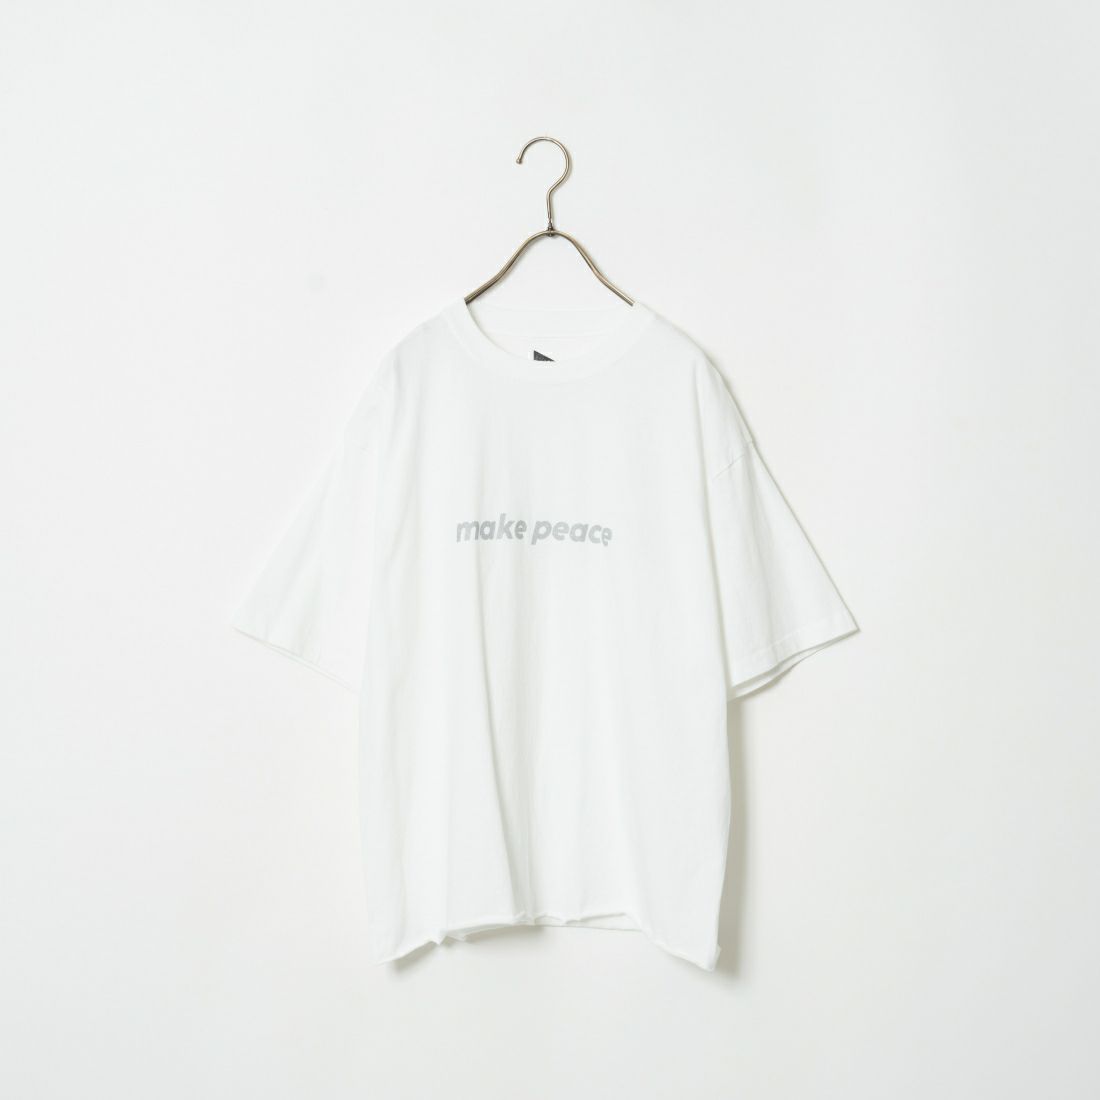 FUNG [ファング] MAKE PEACE カットオフプリントTシャツ [MAKE-PEACE] WHITE/SILV